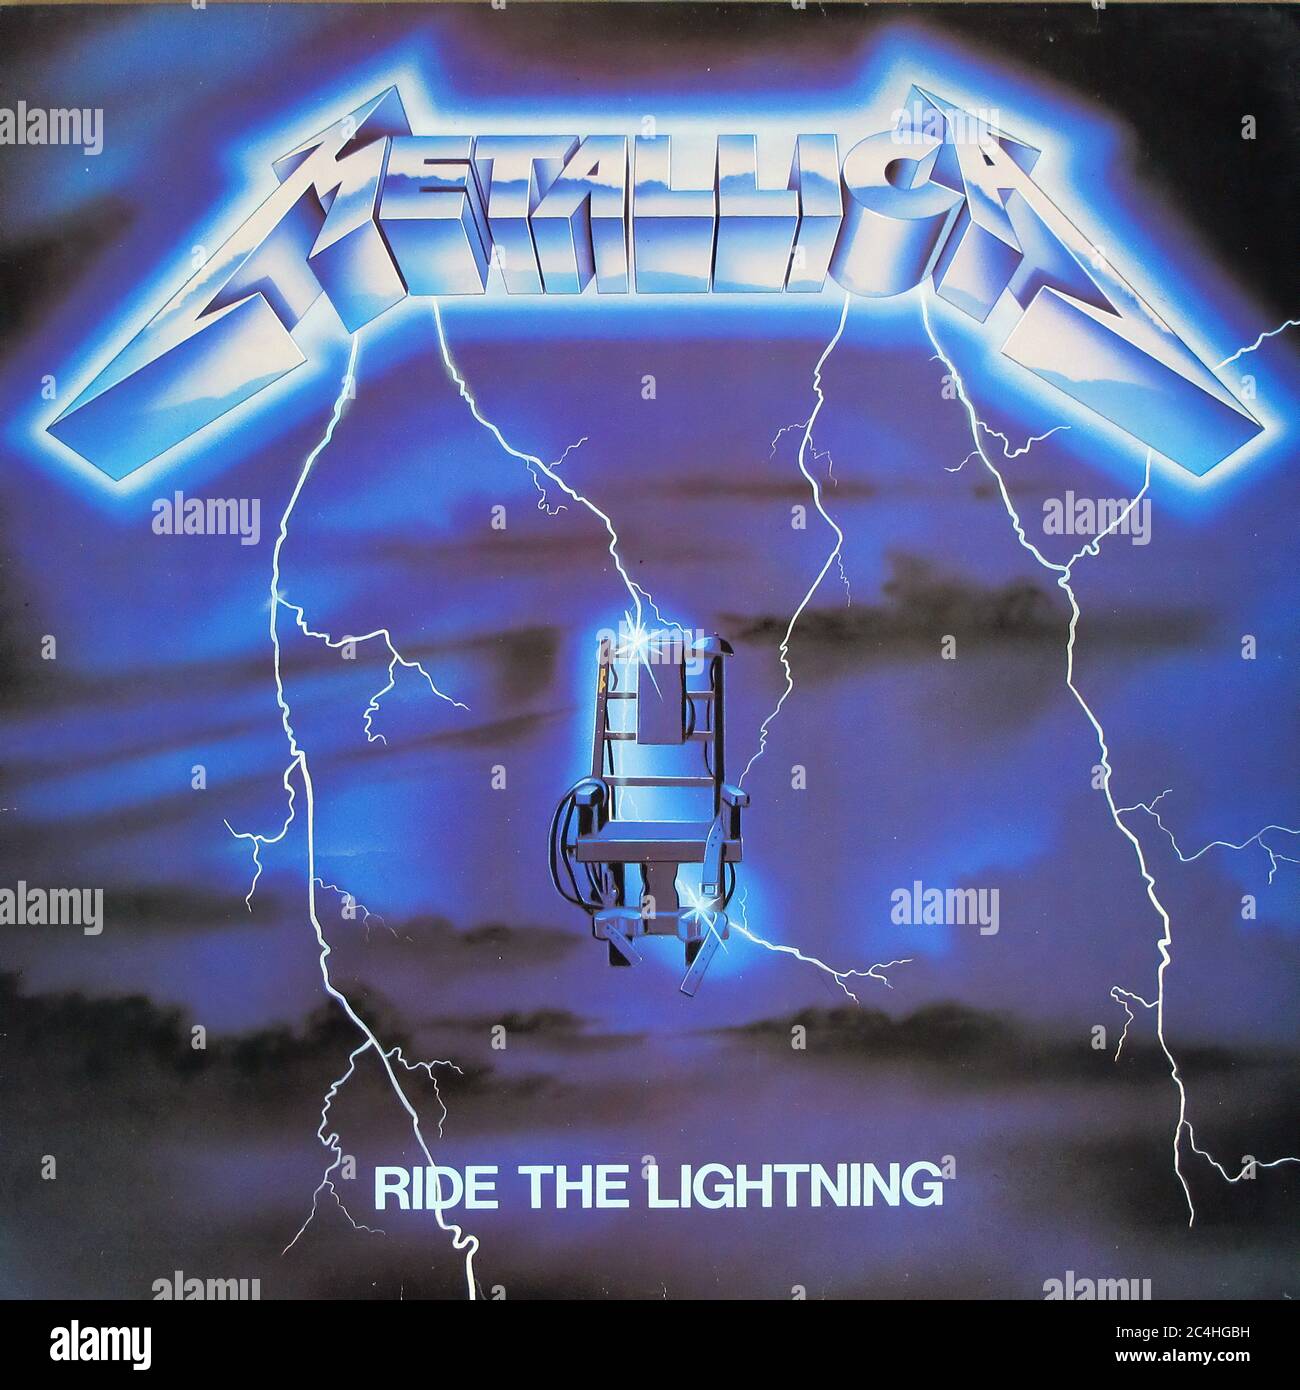 Metallica Ride The Lightning Blue Vinyl LP